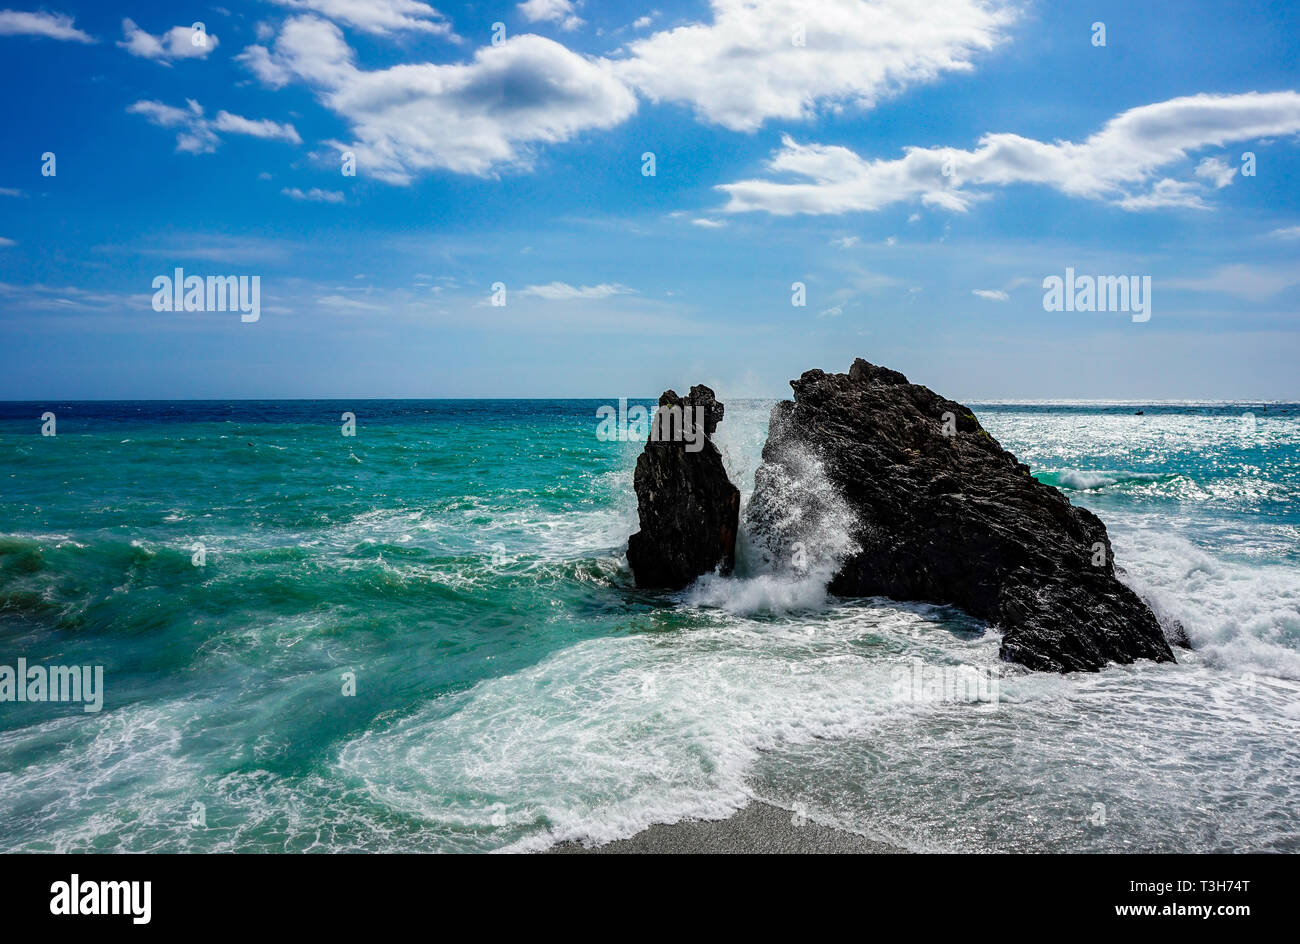 Big rock in the mediterrean sea between the waves crashing a big wave Stock Photo